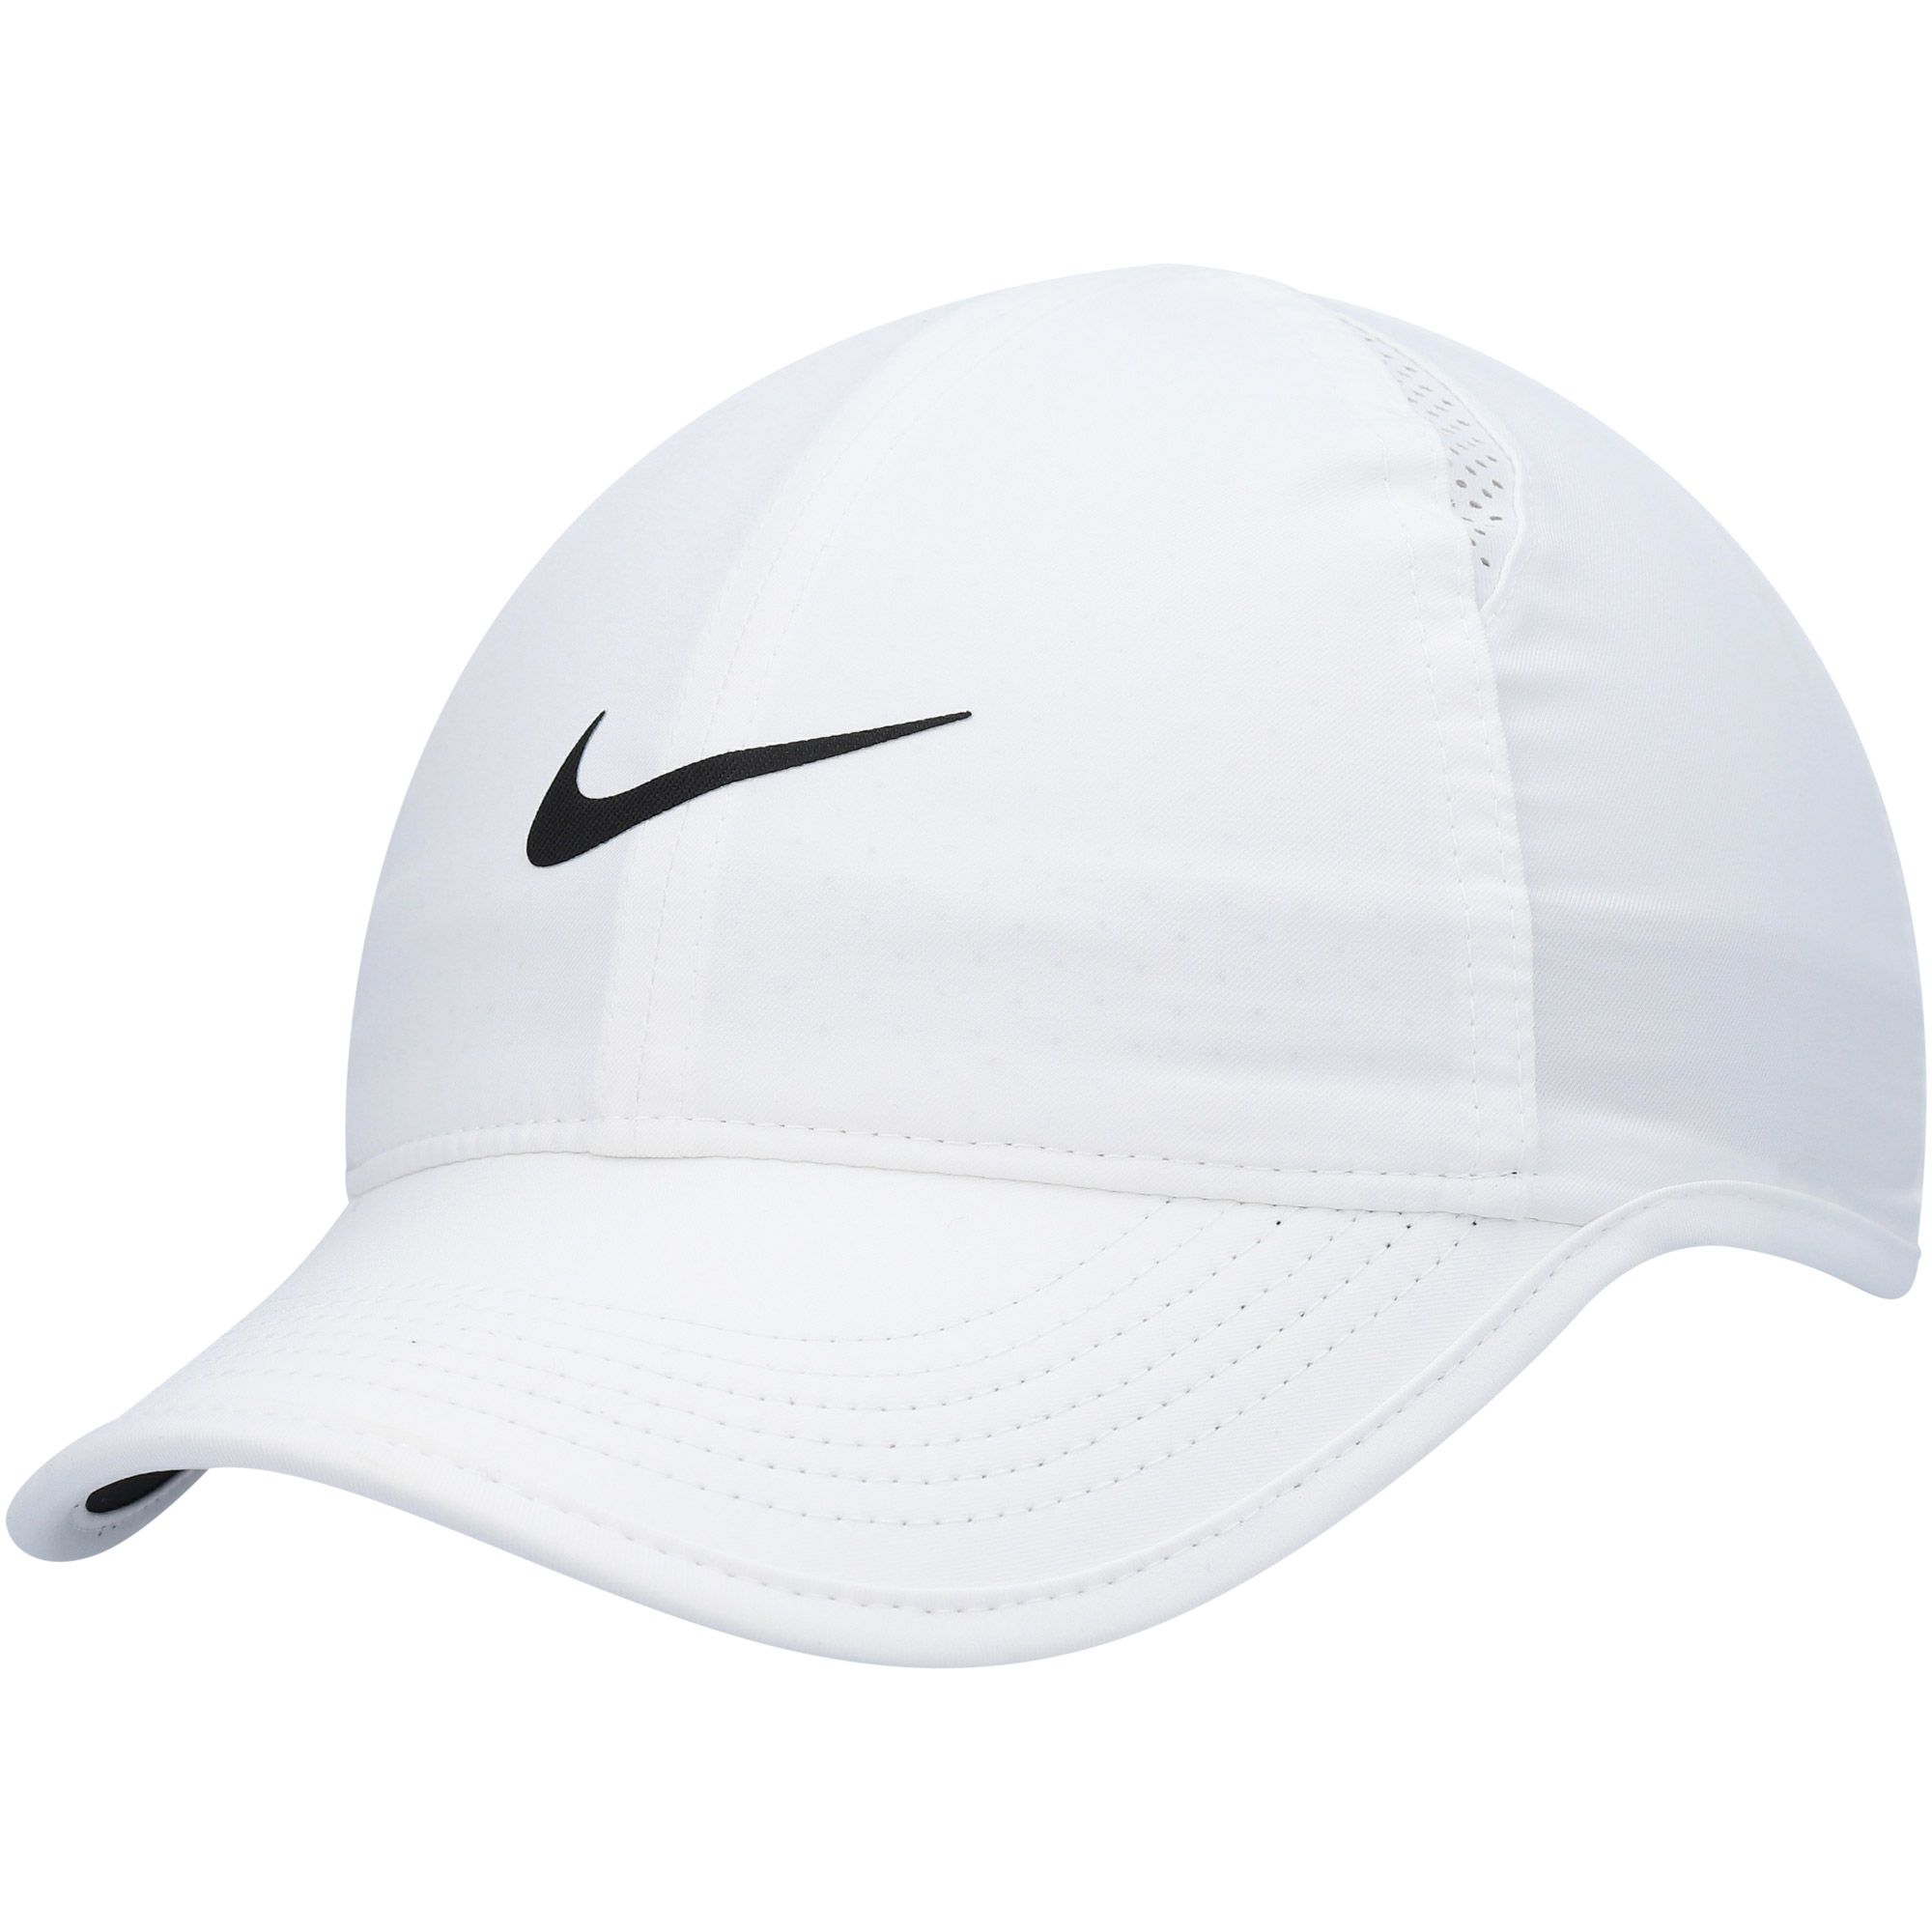 Women's Nike White Featherlight Performance Adjustable Hat | Fanatics